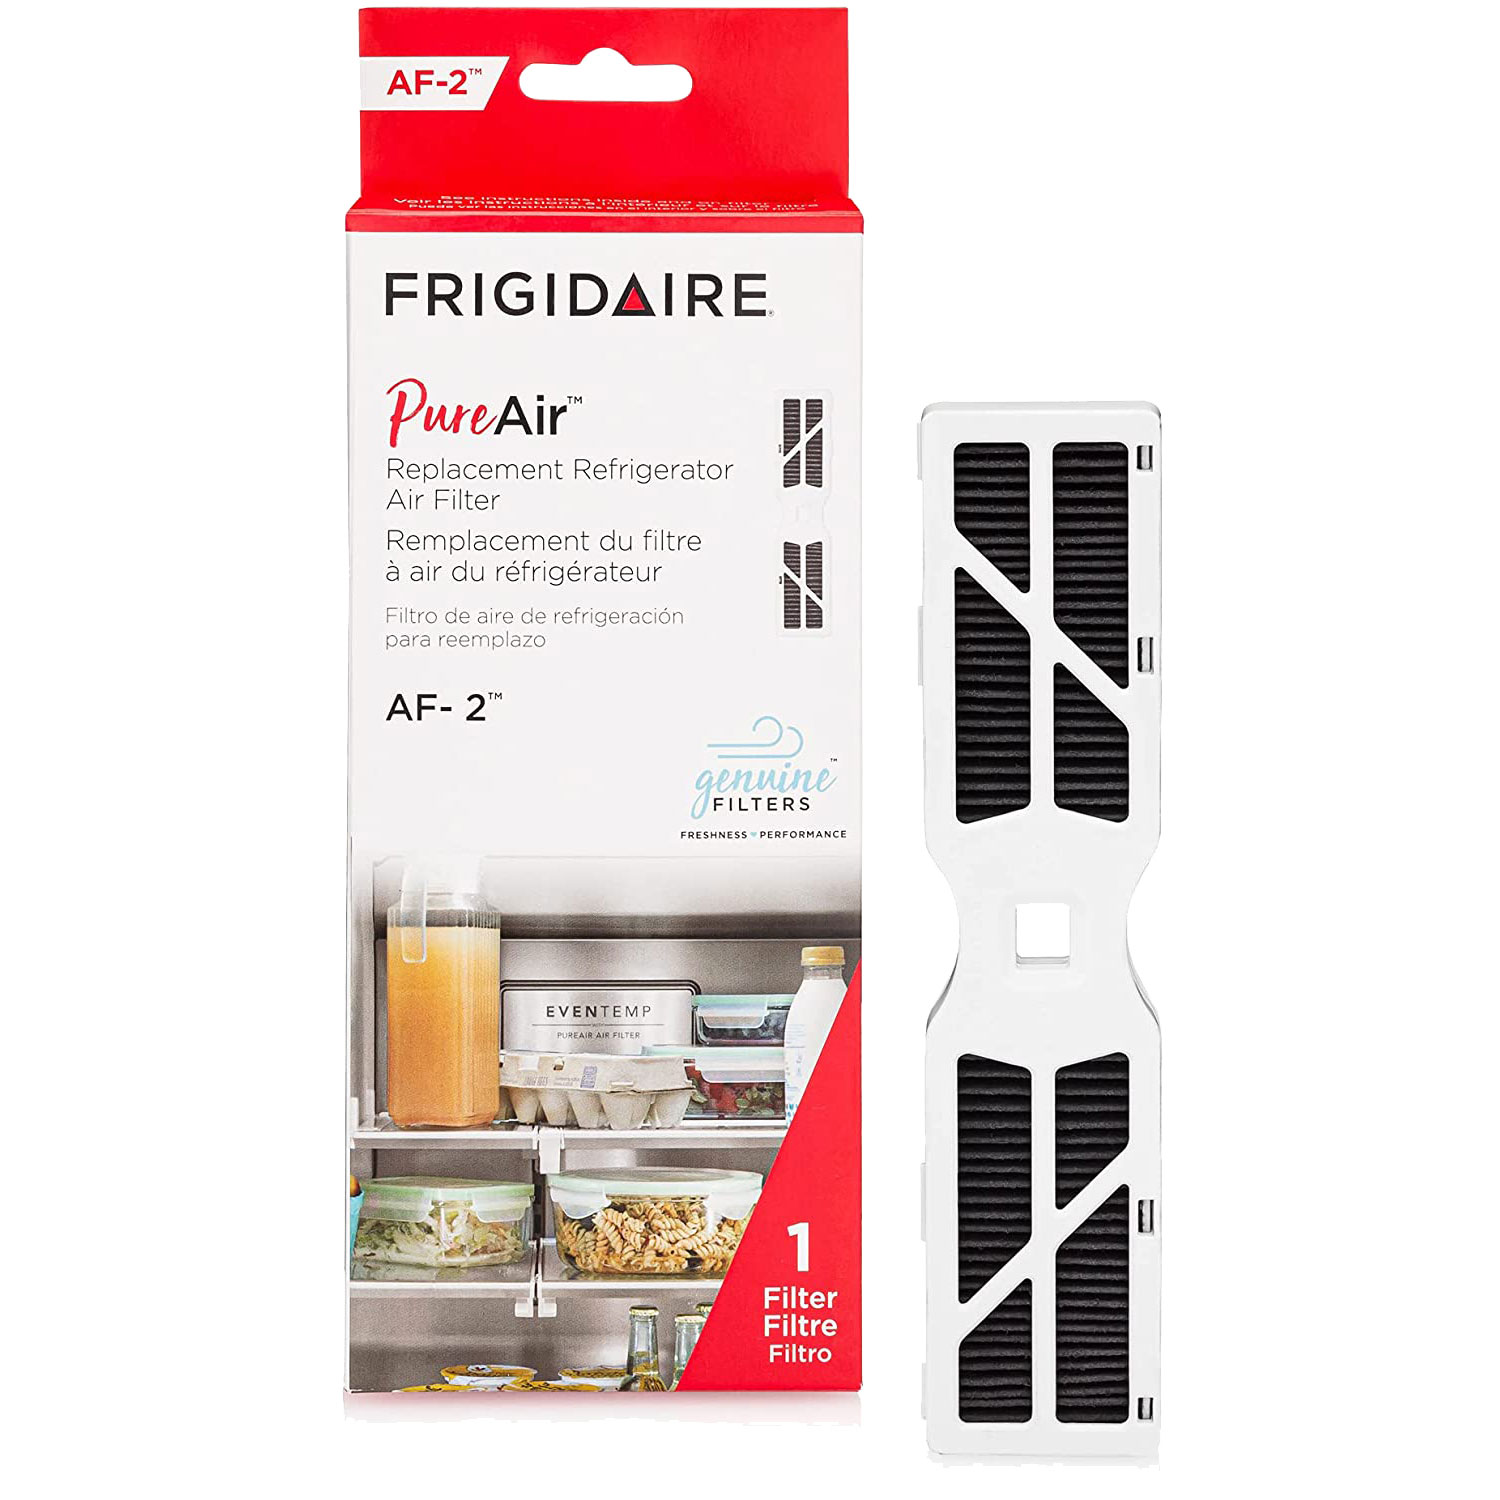 frigidaire pureair af 2 air filter